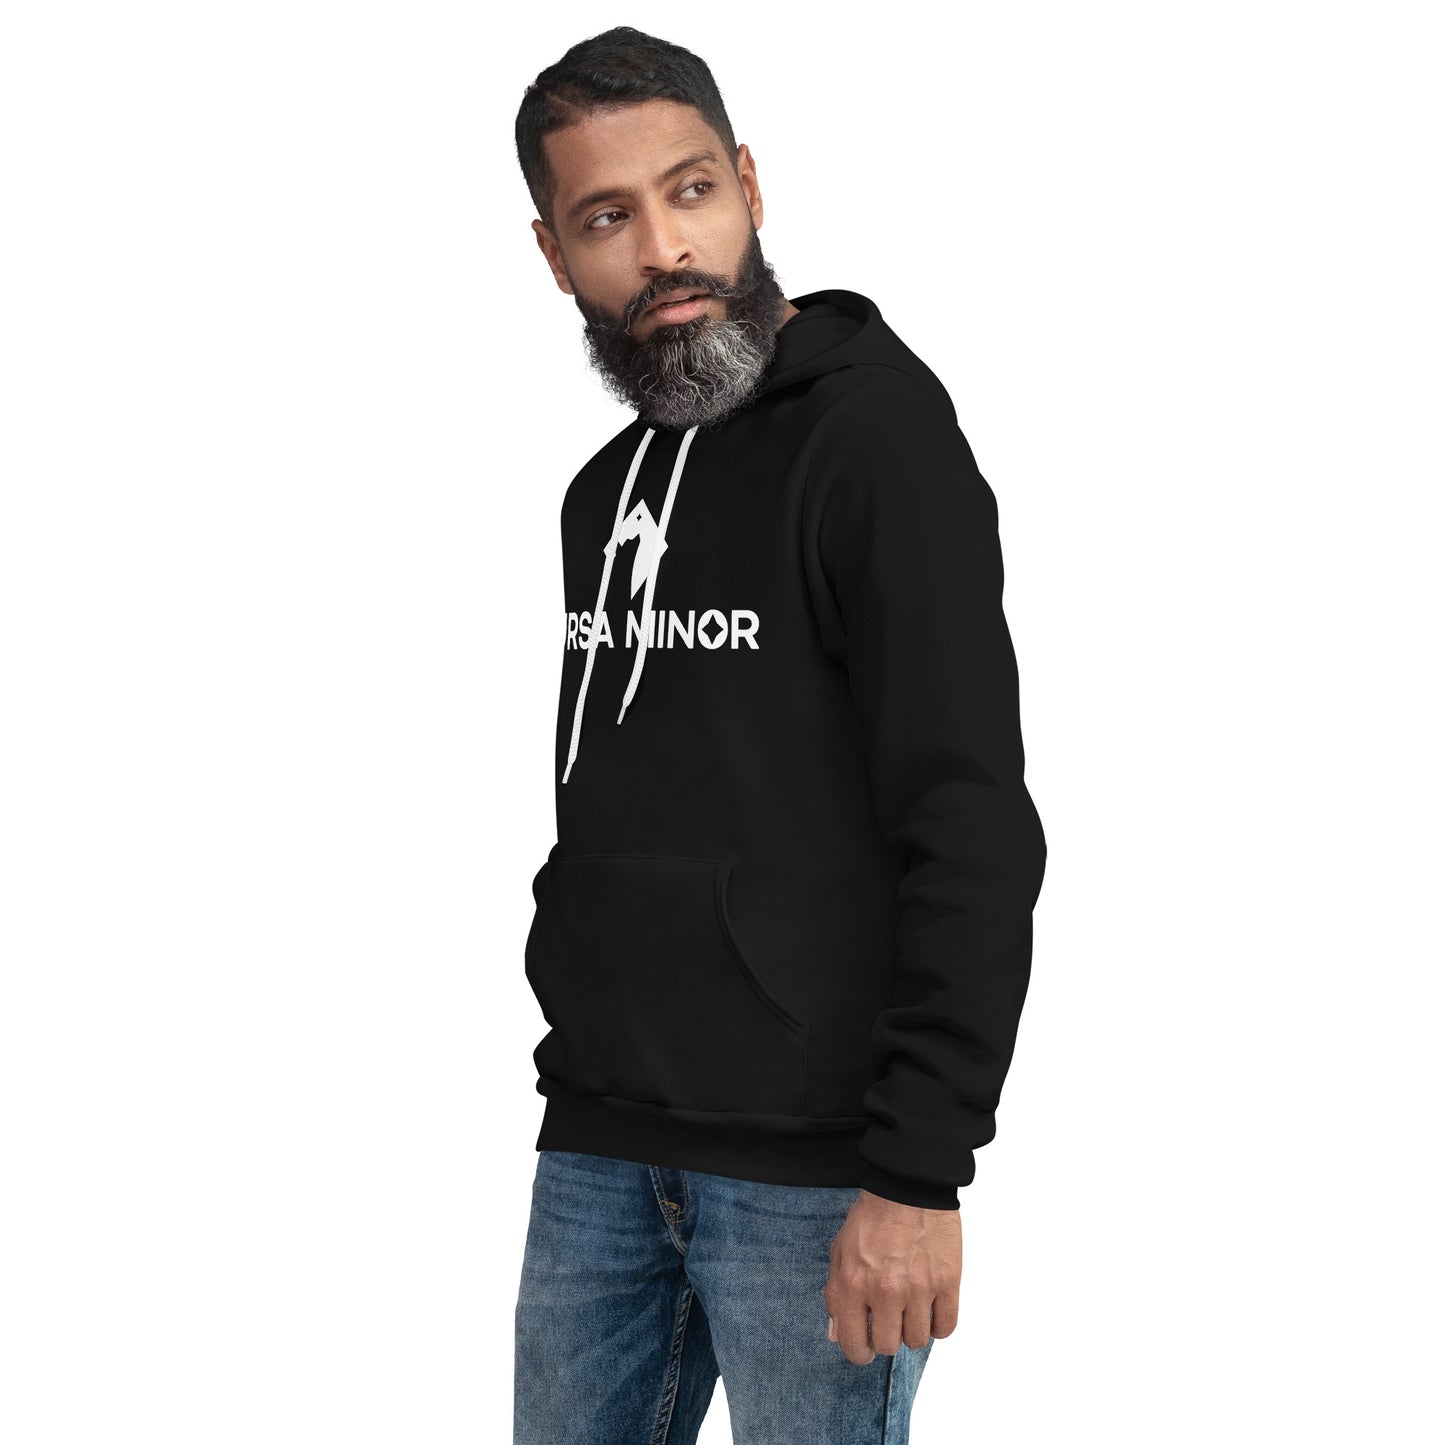 Ursa Minor - Unisex hoodie